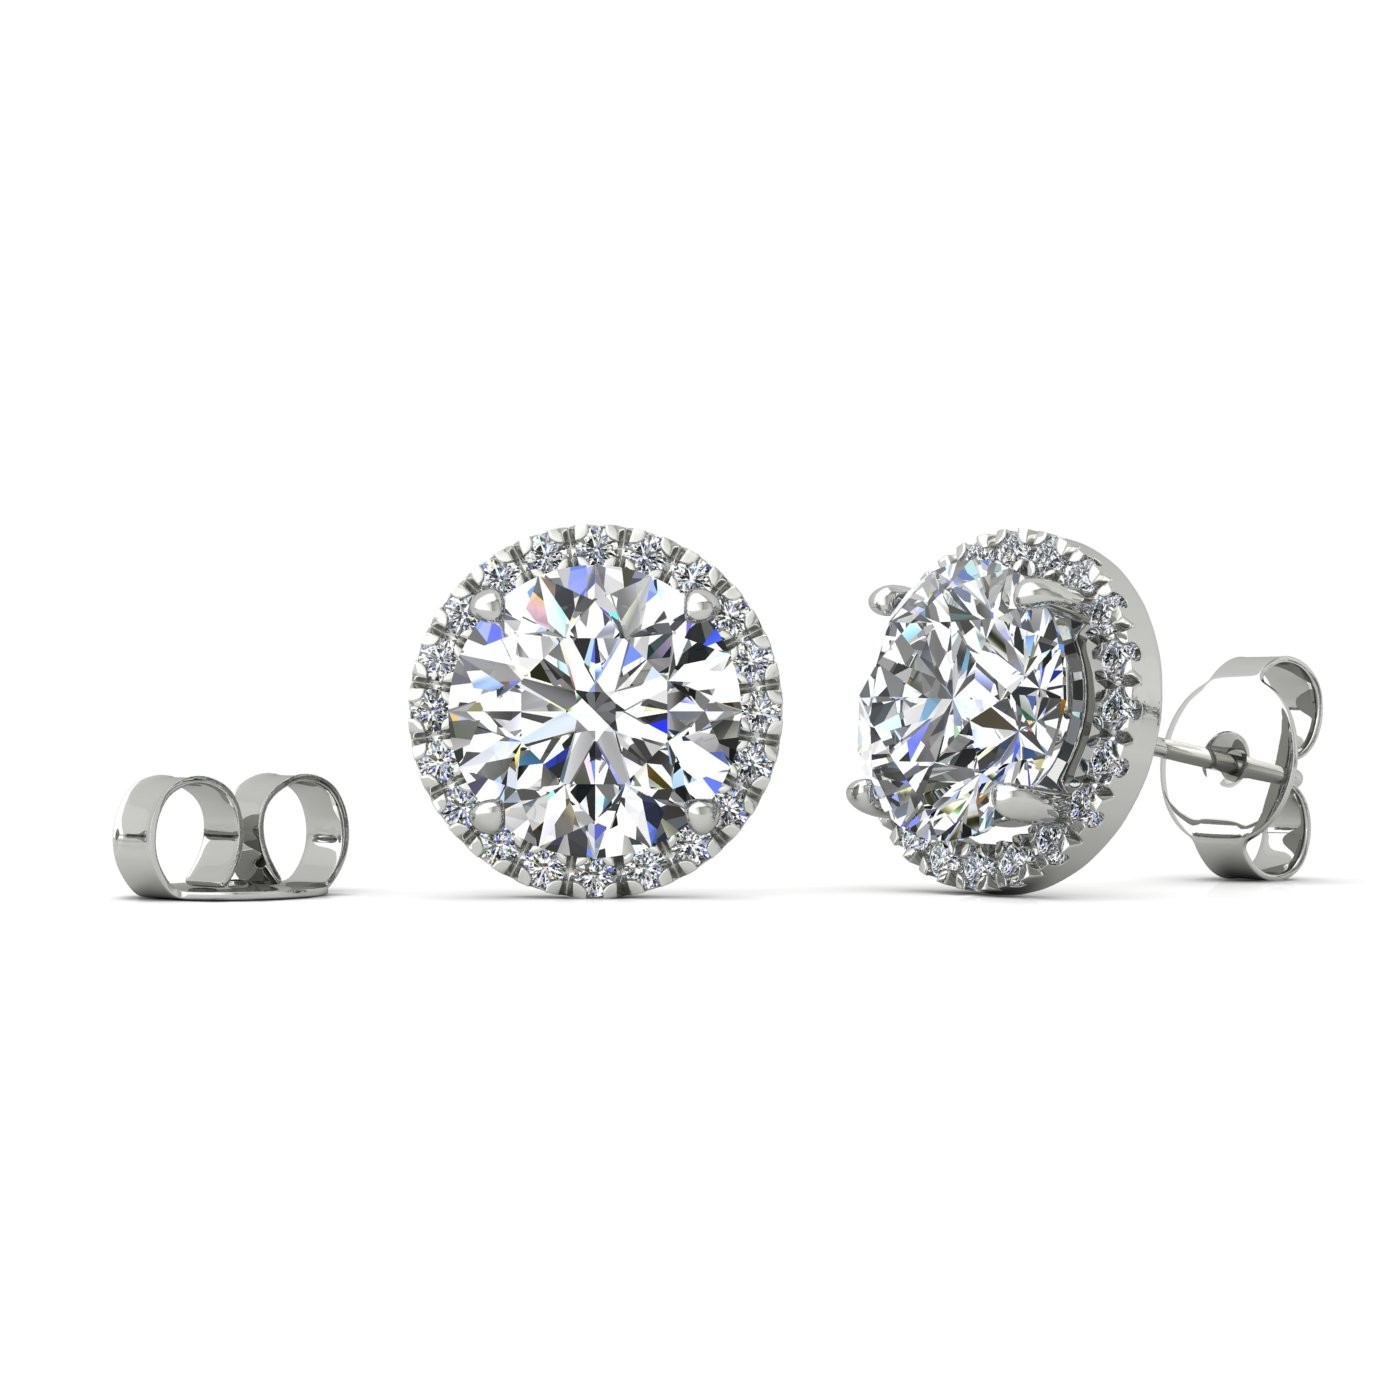 18k white gold 1 ct each (2,0 tcw) 4 prongs round shape diamond earrings with diamond pavÉ set halo